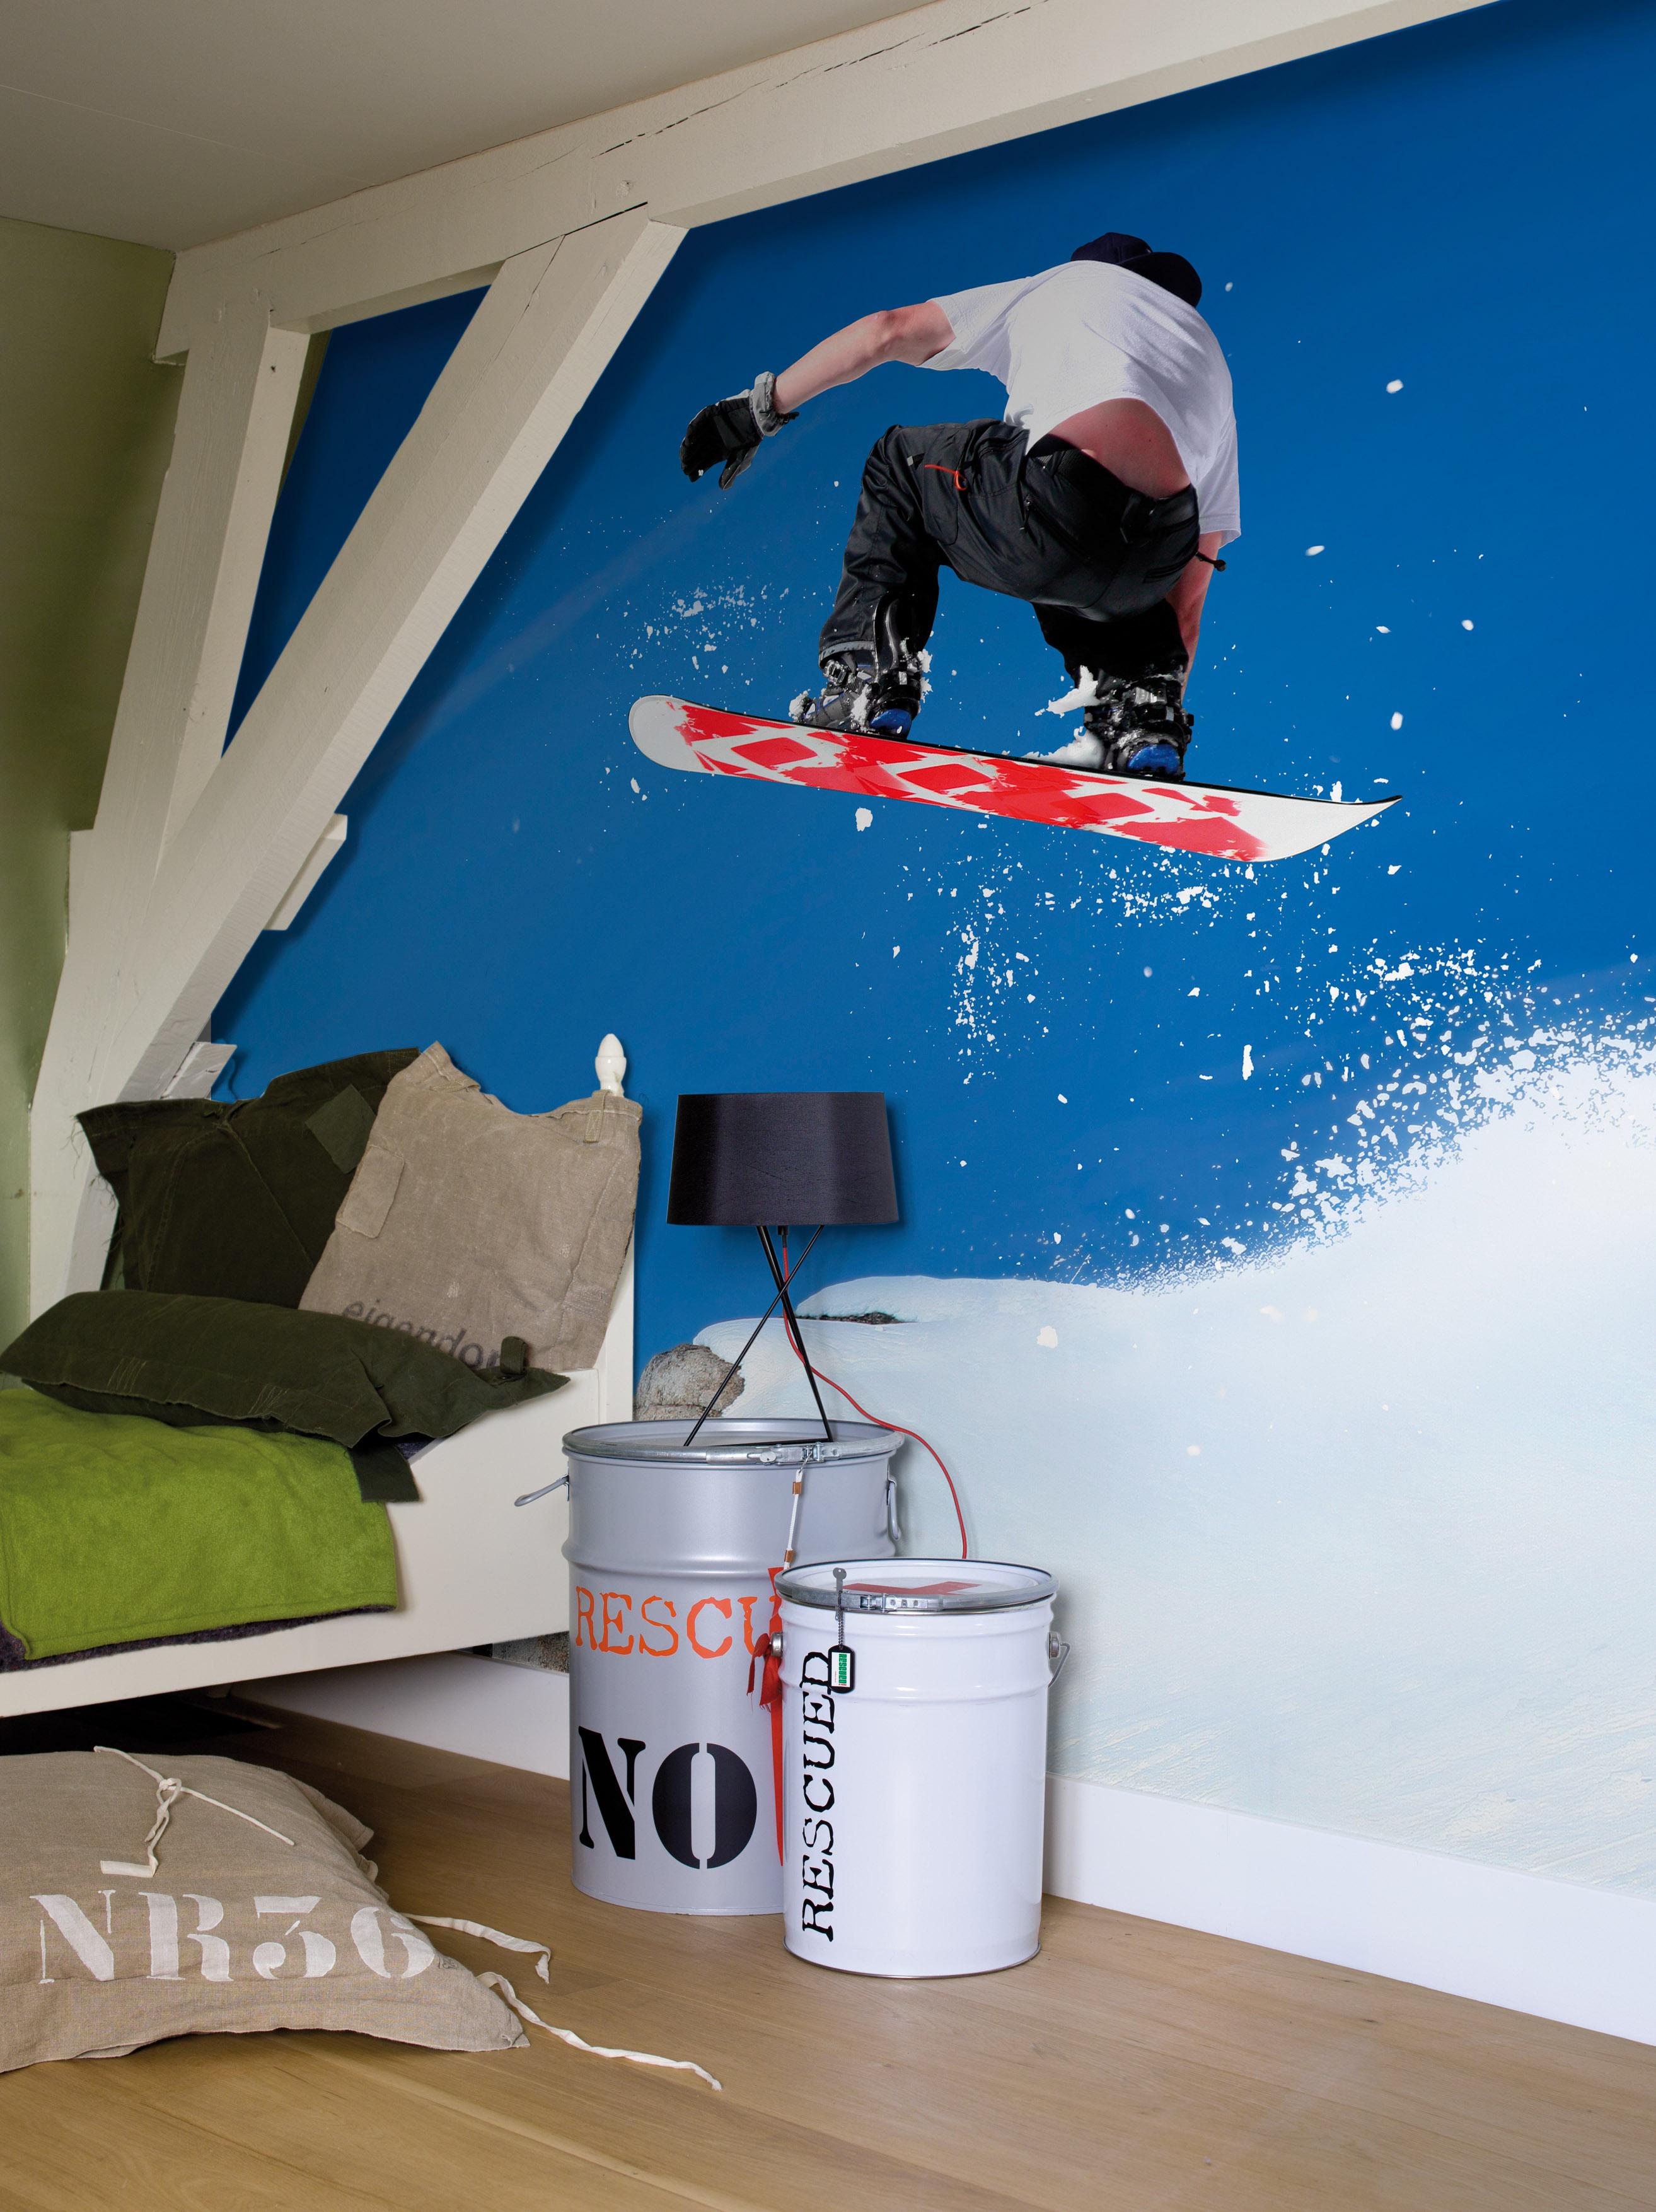 Fototapete mit Snowboarder-Motiv #jugendzimmer #fototapete #wandtapete ©BN Wallcoverings